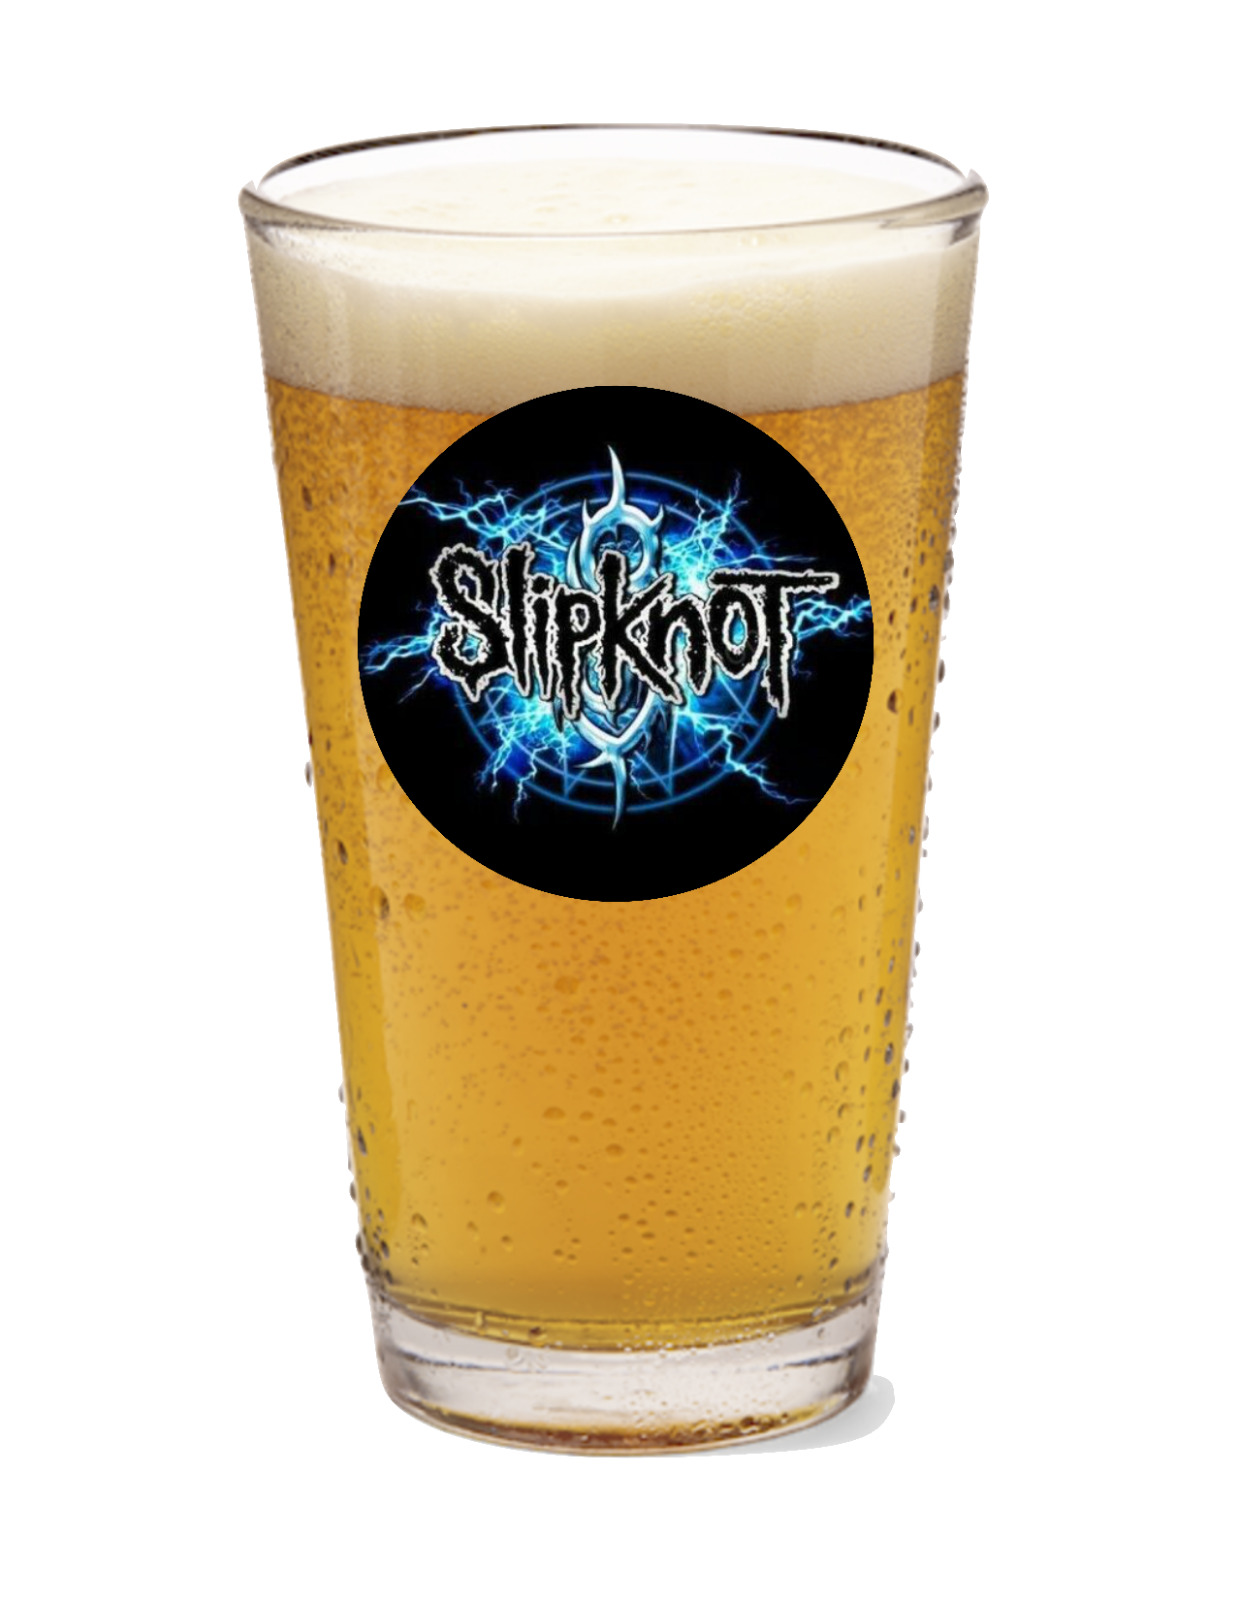 Slipknot - Rock and Roll - 16oz Pint Beer Glass Seltzer Barware Tea Cocktail 59